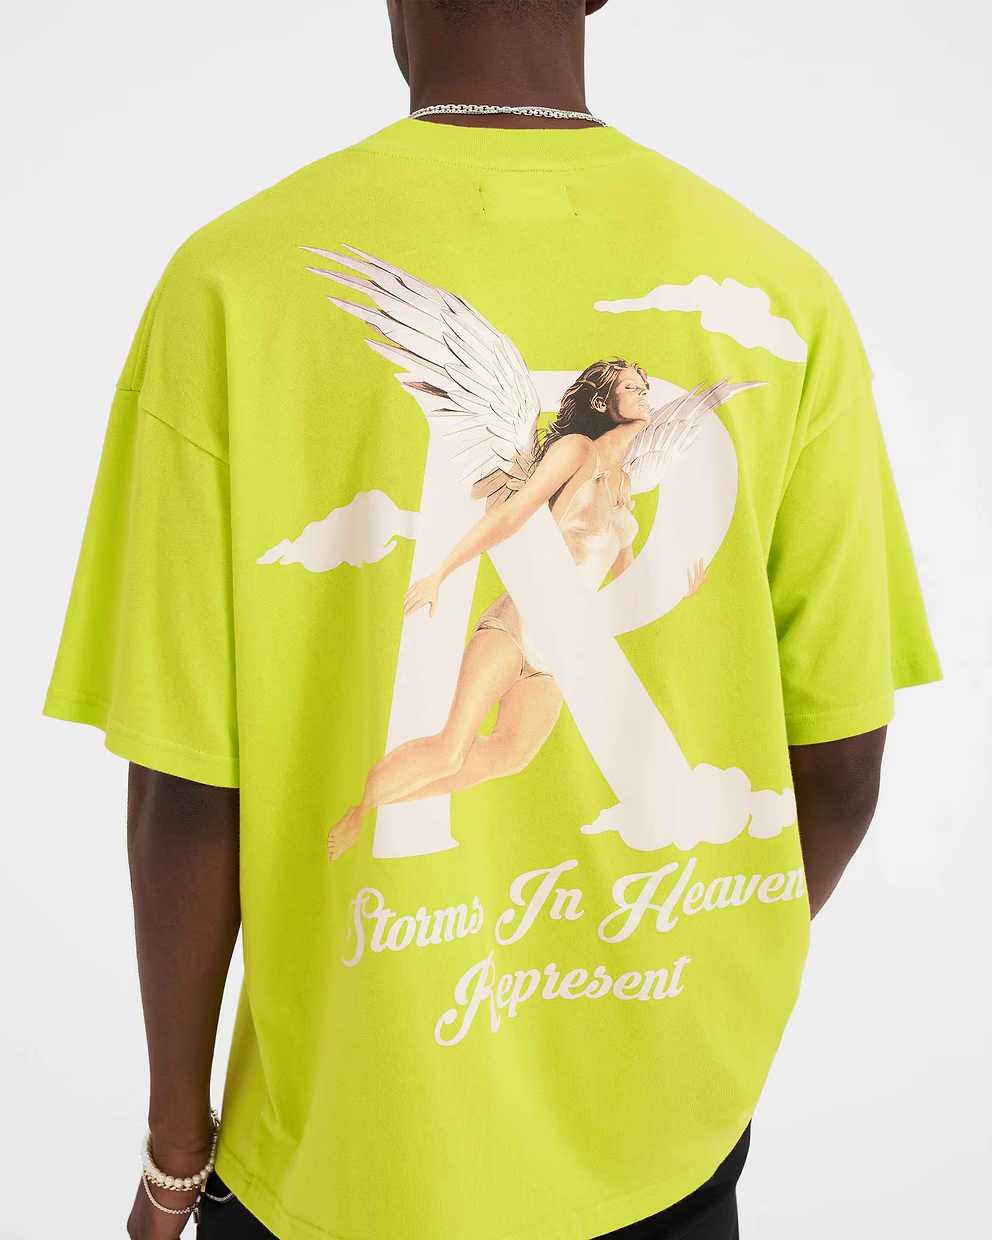 Represent Storms in Heaven T-Shirt Kiwi